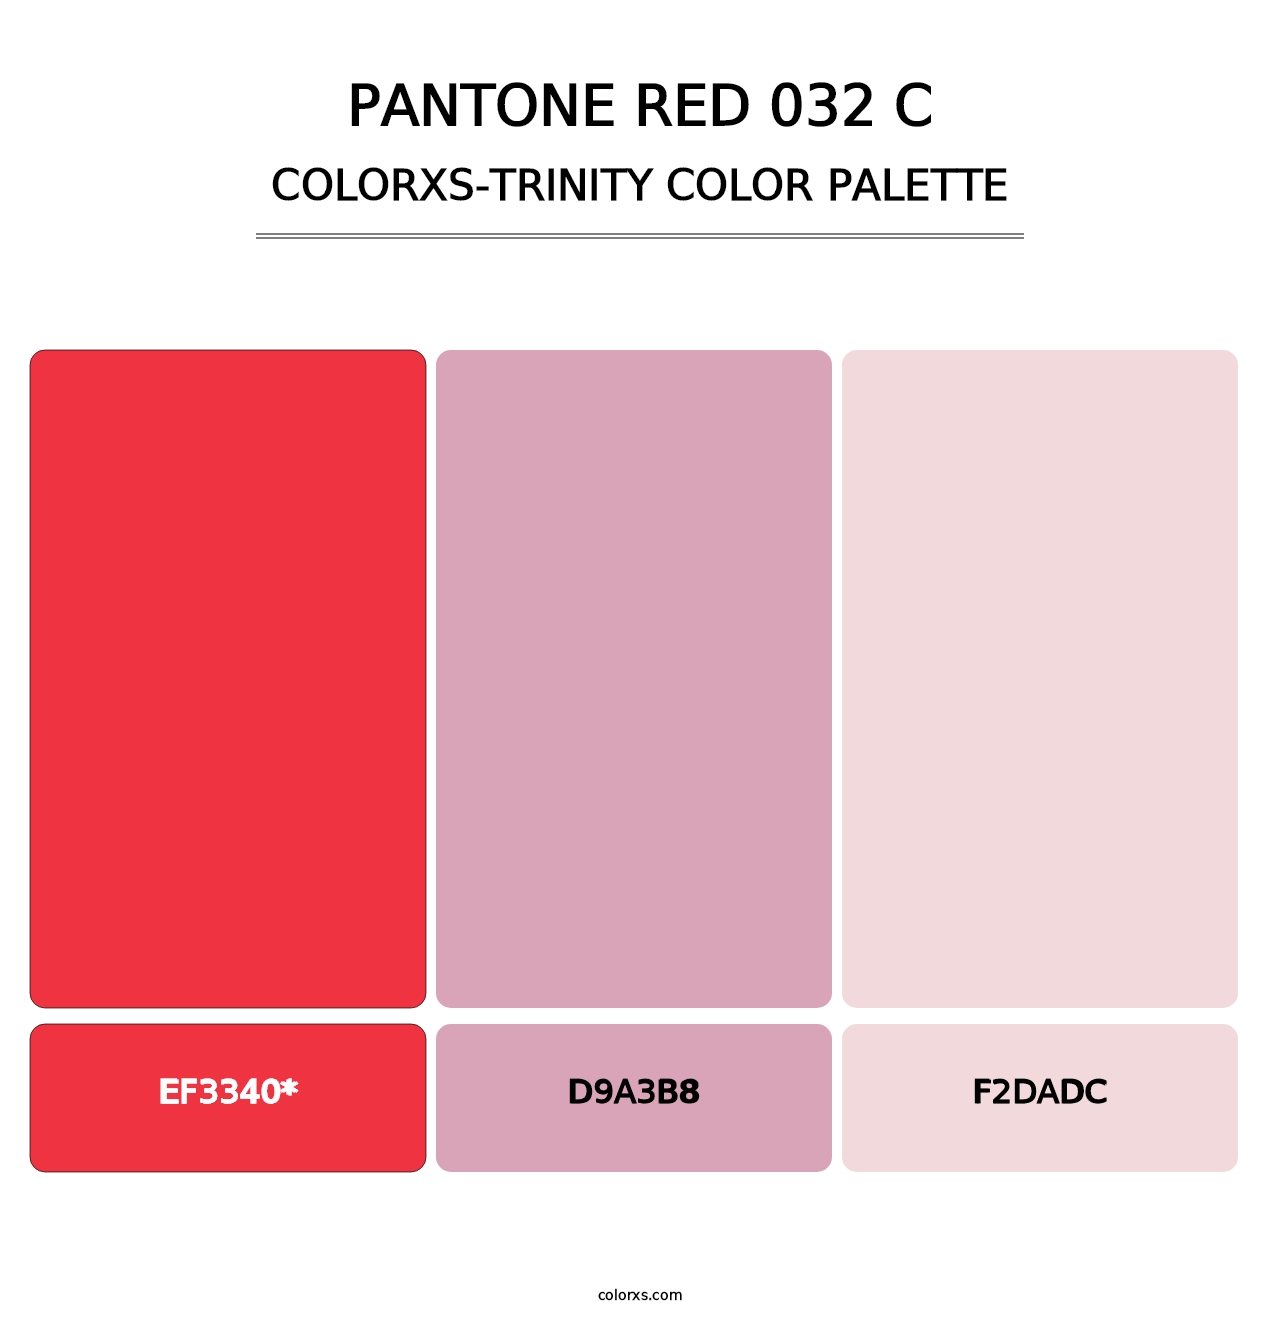 PANTONE Red 032 C - Colorxs Trinity Palette